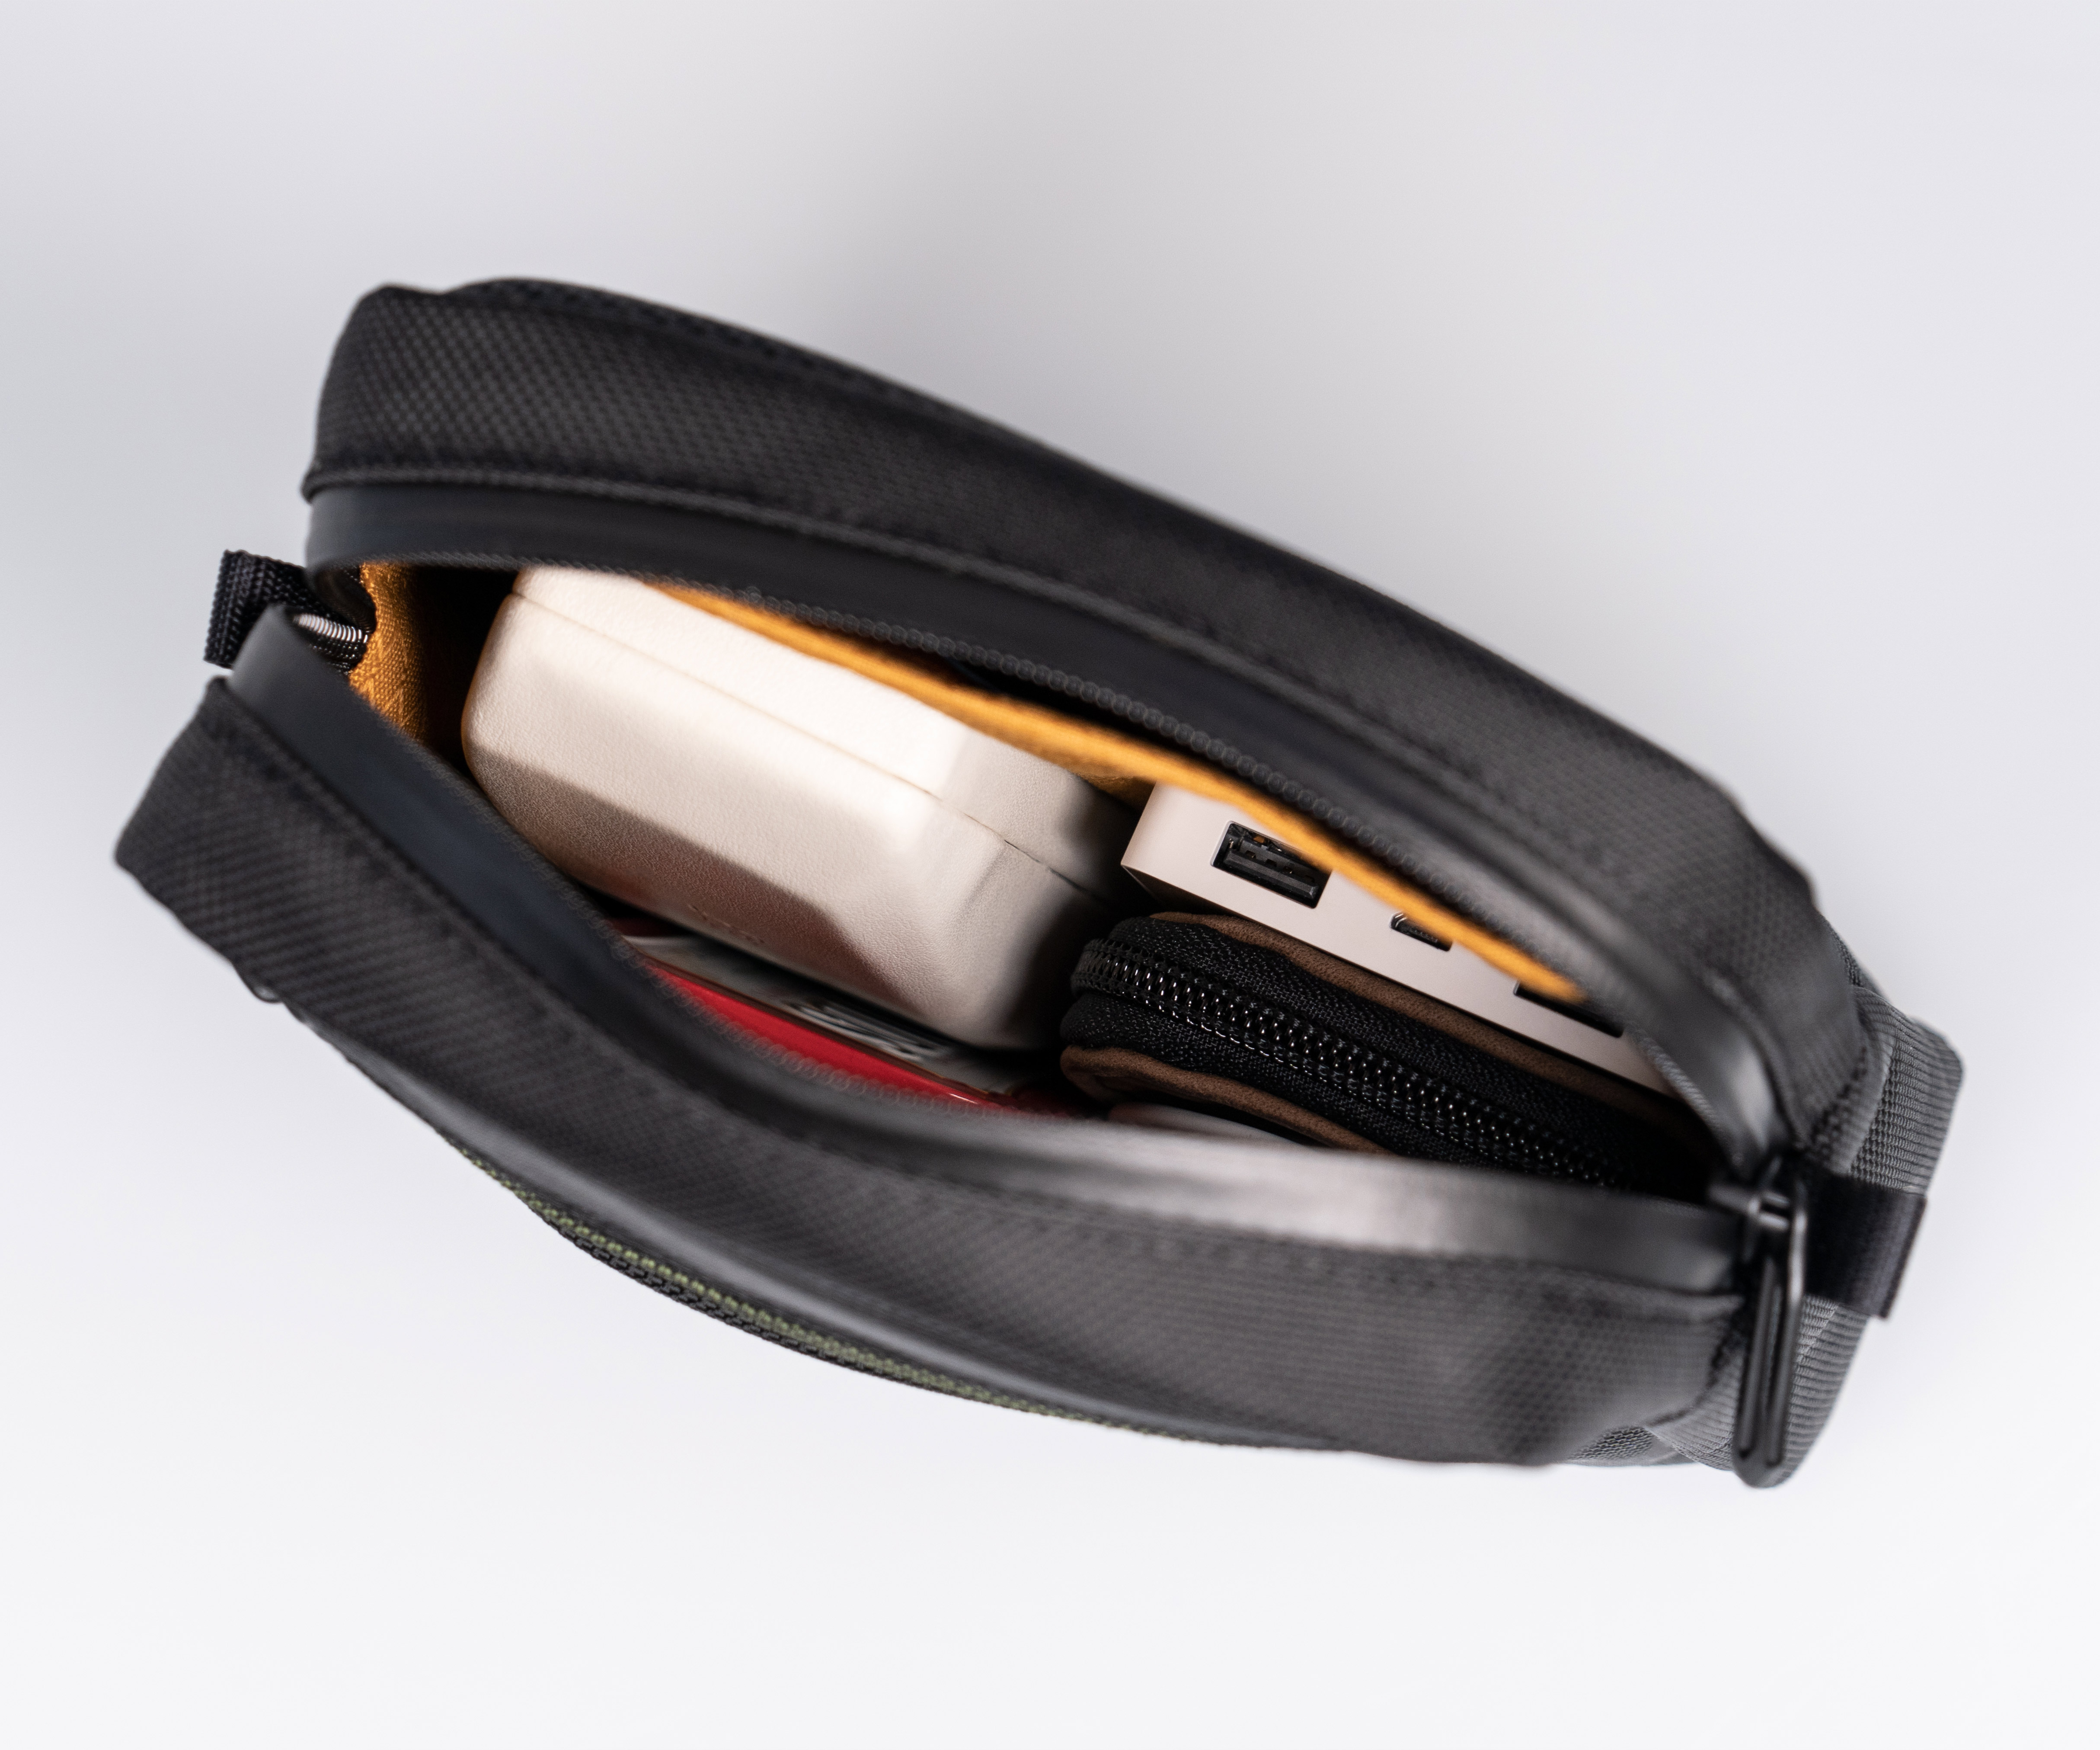 Waterproof, zipper-secured main compartment holds bulkier items & iPad mini